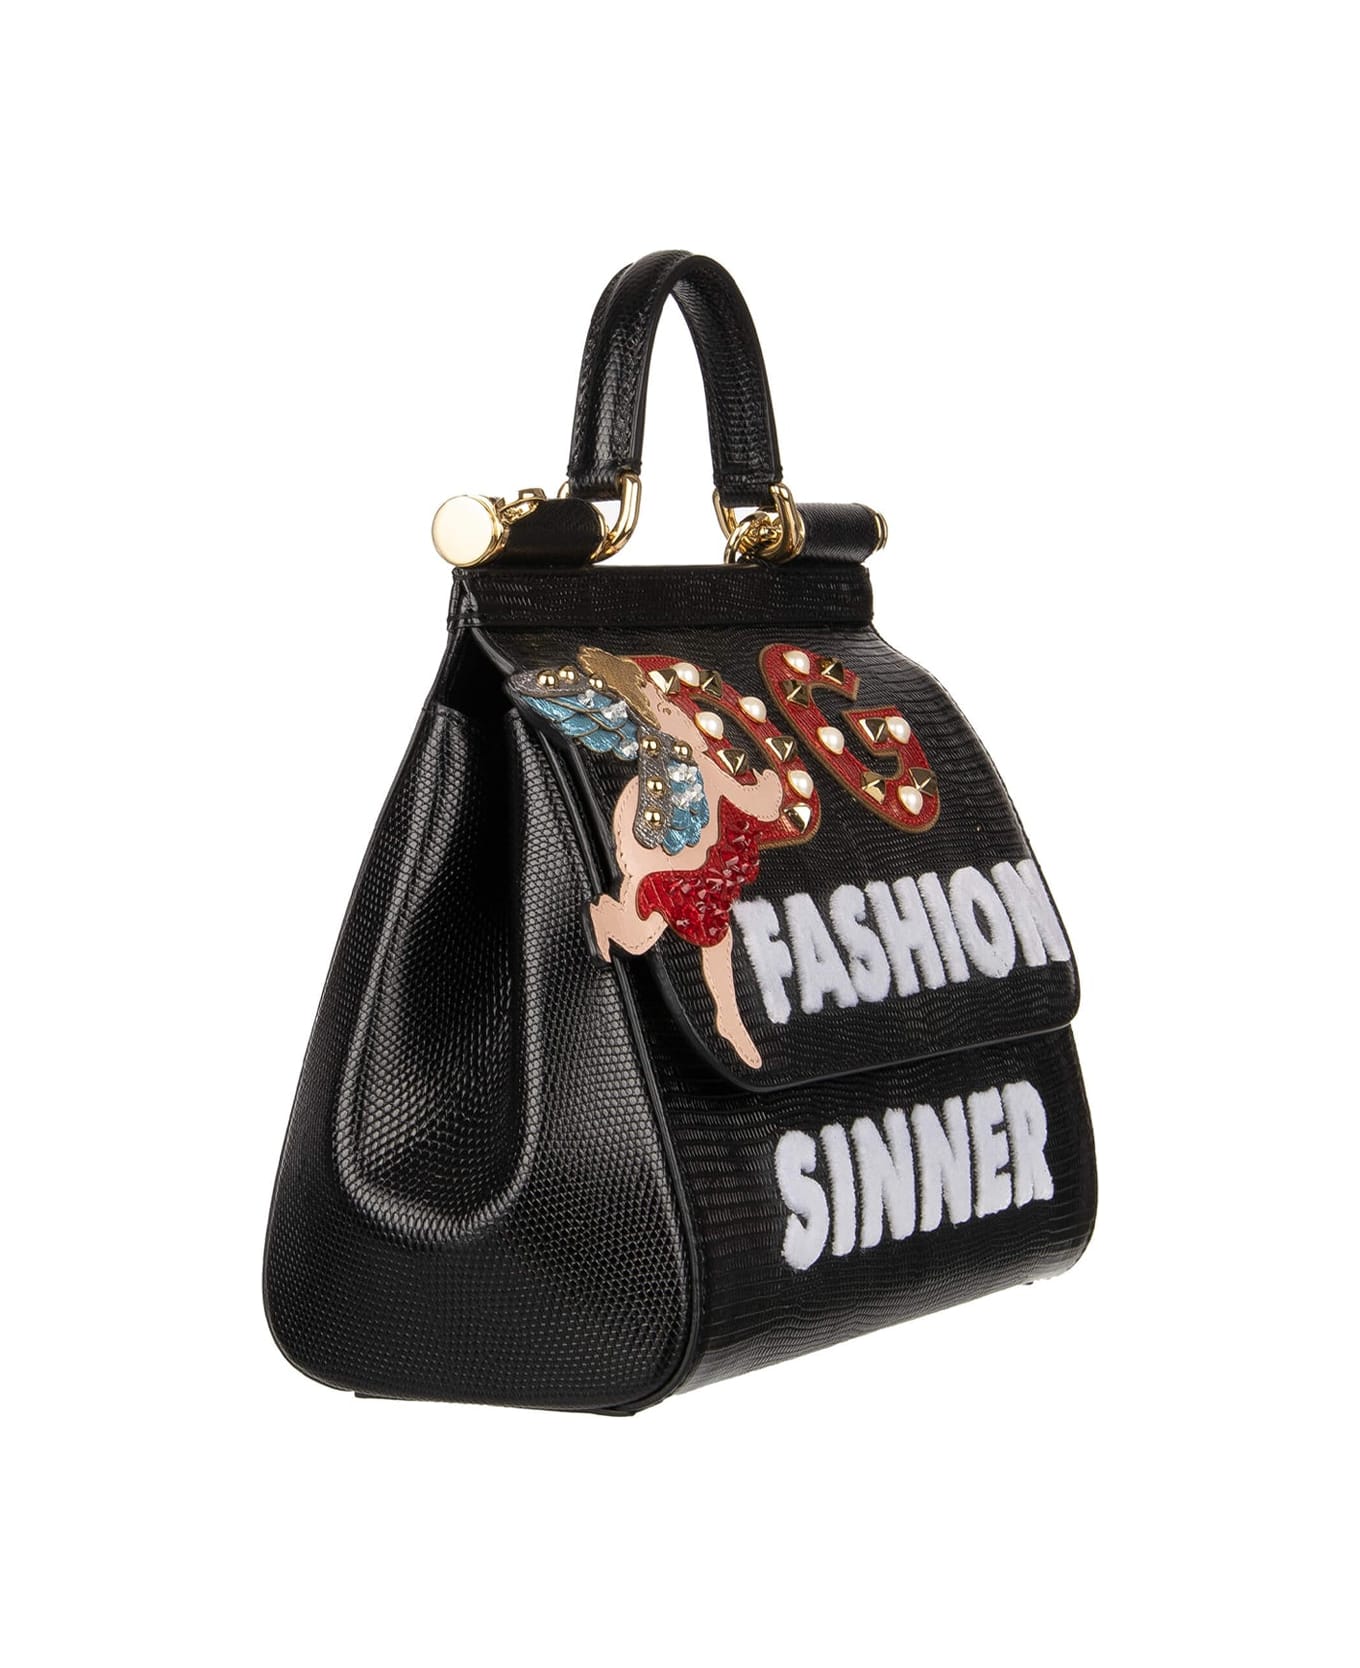 Dolce & Gabbana Fashion Sinner Angel Sicily Bag - Black